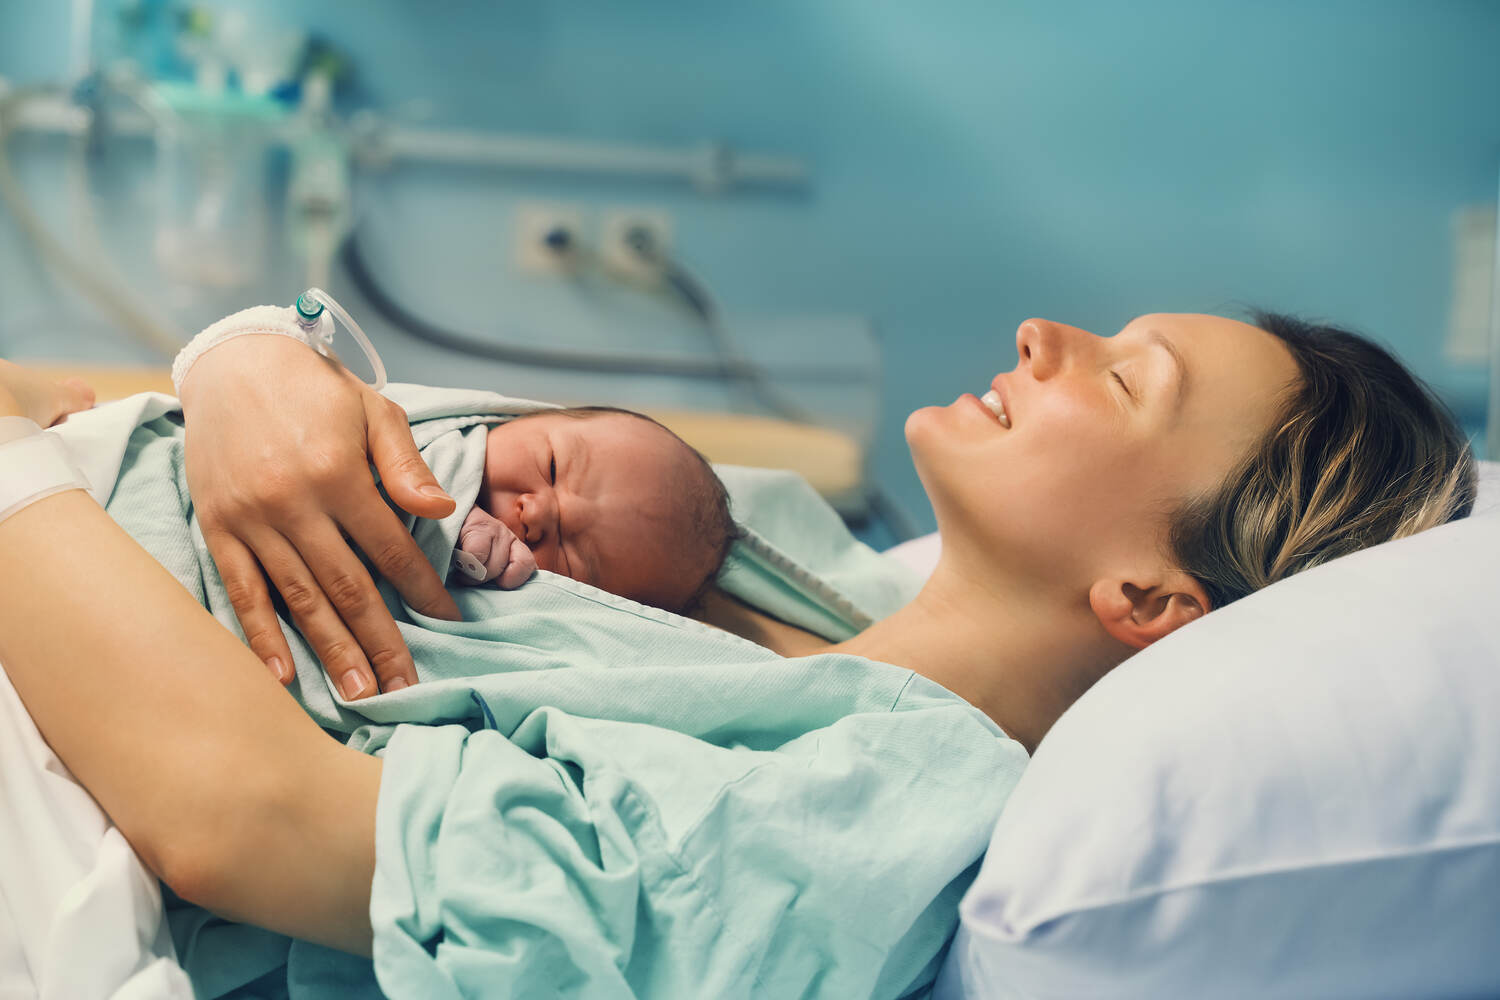 woman holding newborn